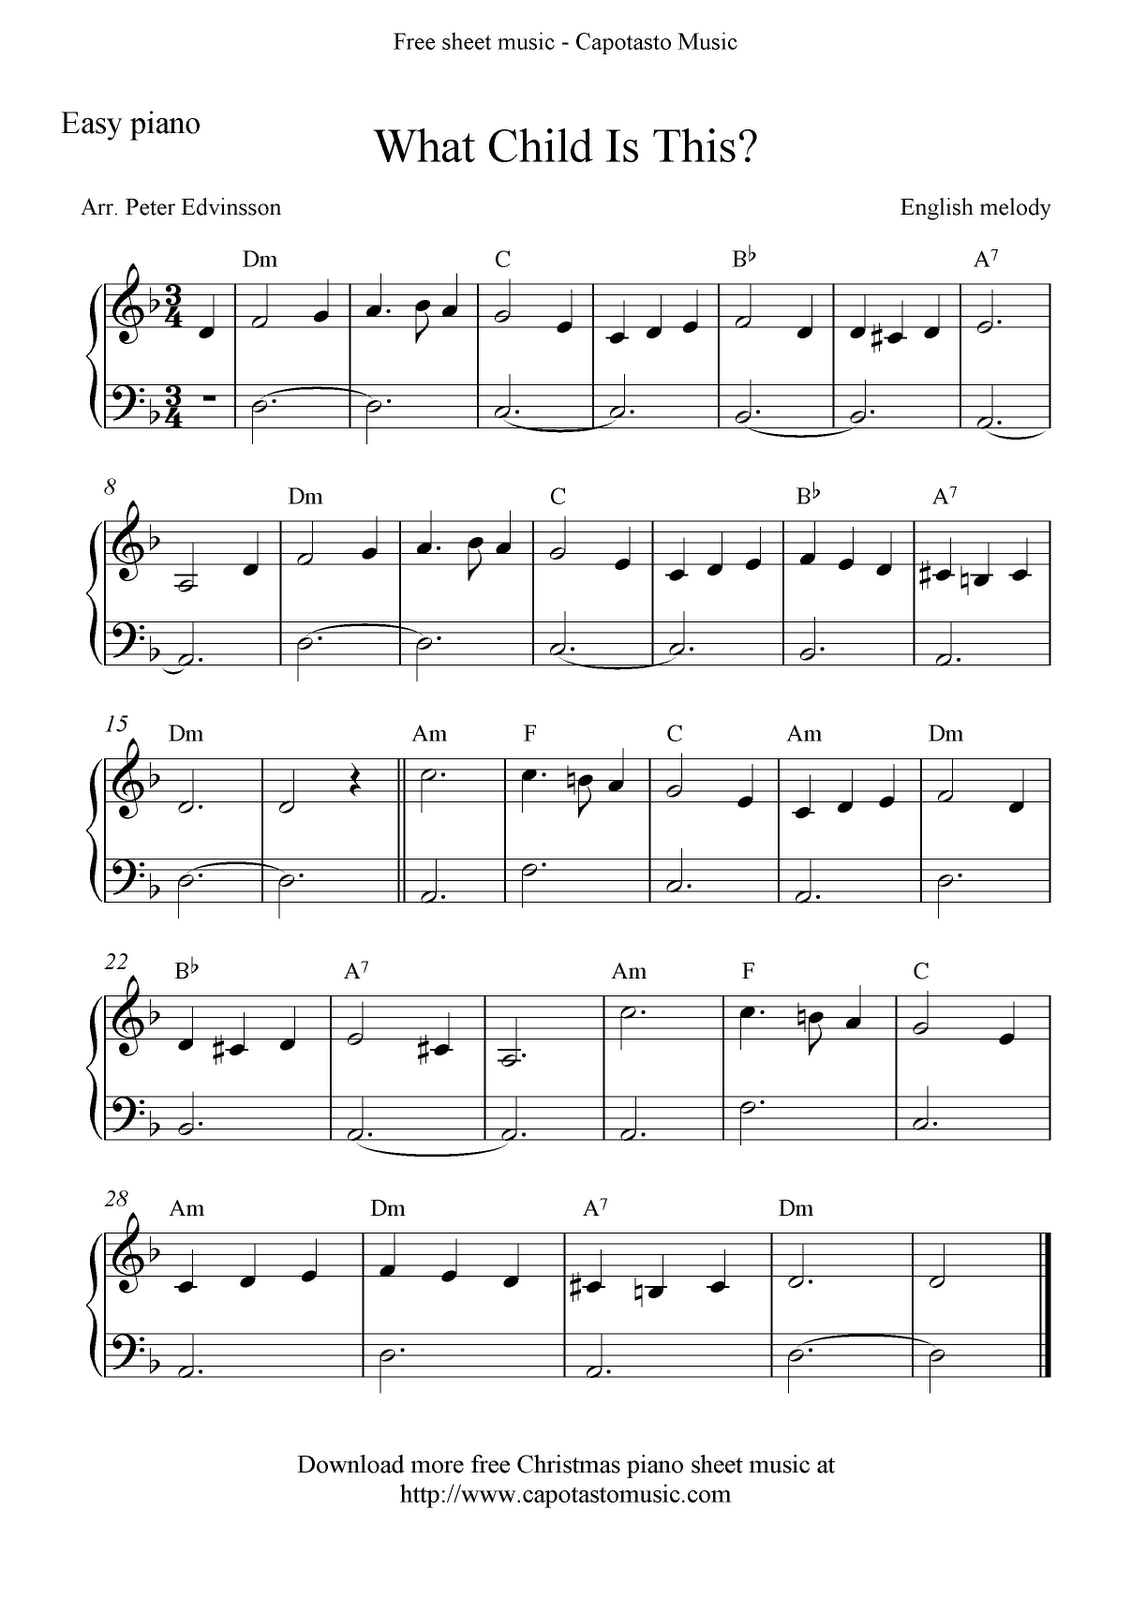 Free Christmas Sheet Music For Piano